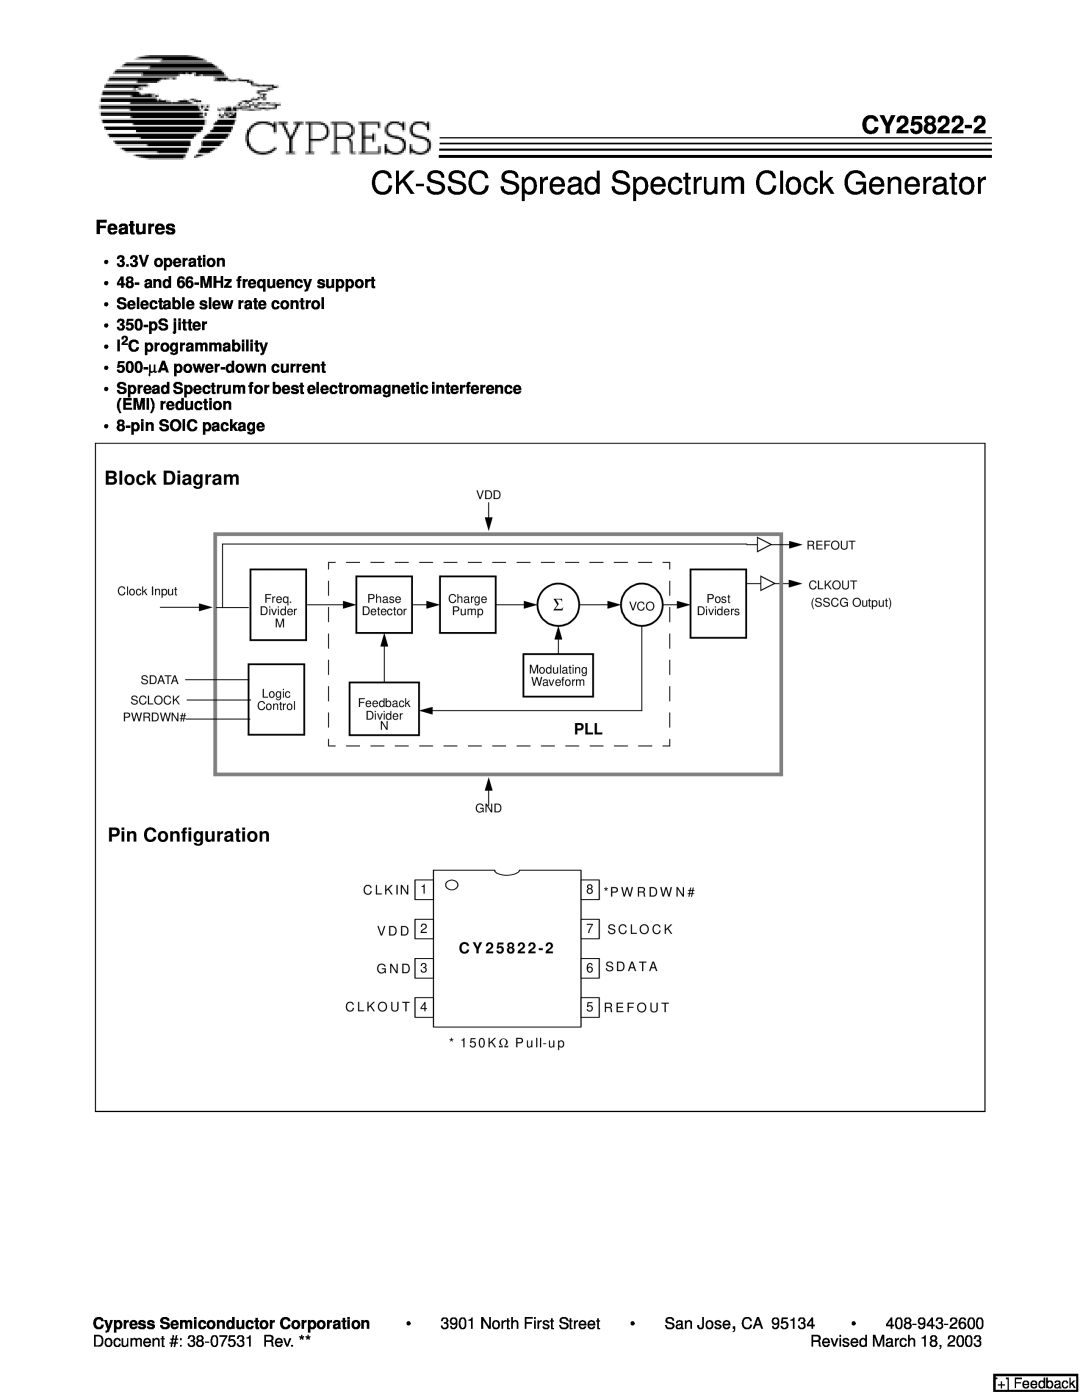 Cypress CY25822-2 manual Features, Block Diagram, Pin Configuration, CK-SSC Spread Spectrum Clock Generator 